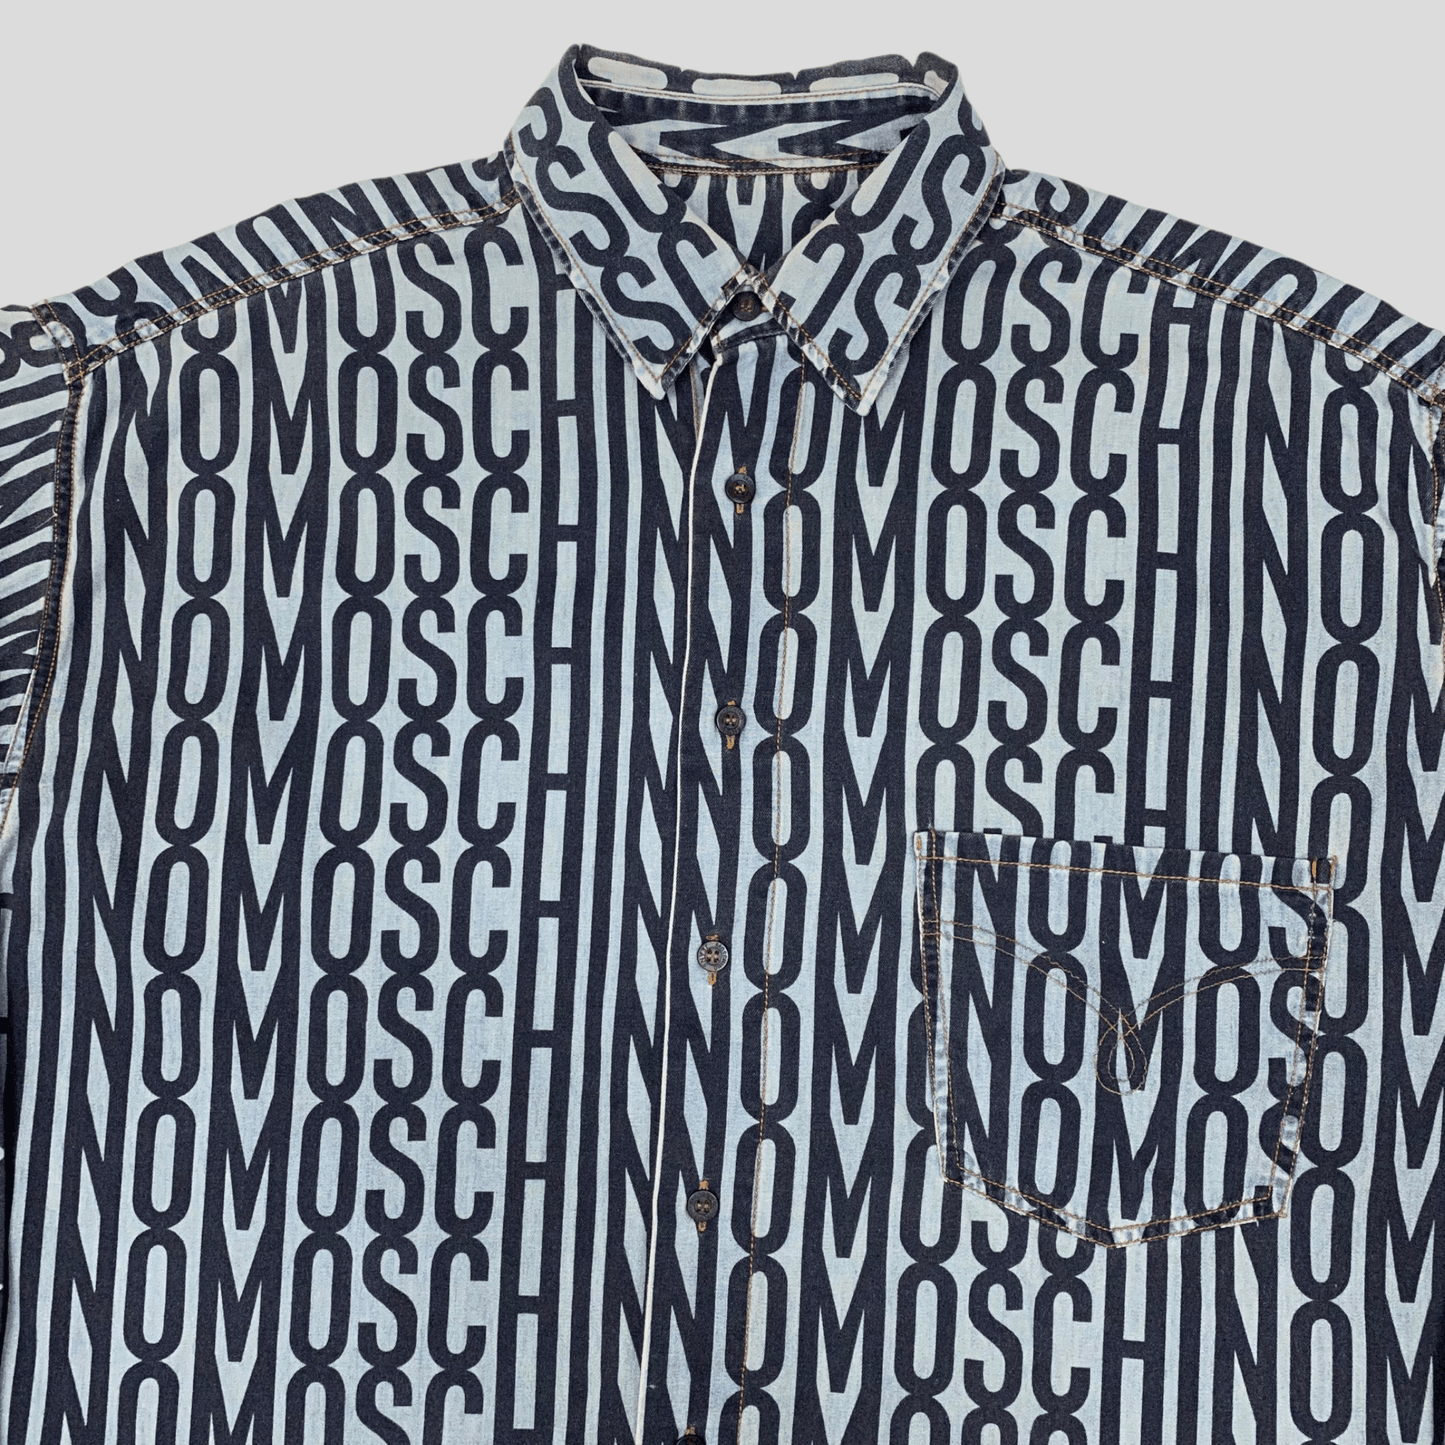 Moschino Jeans 1995 Denim Spellout Shirt - XL (XXL) - Known Source